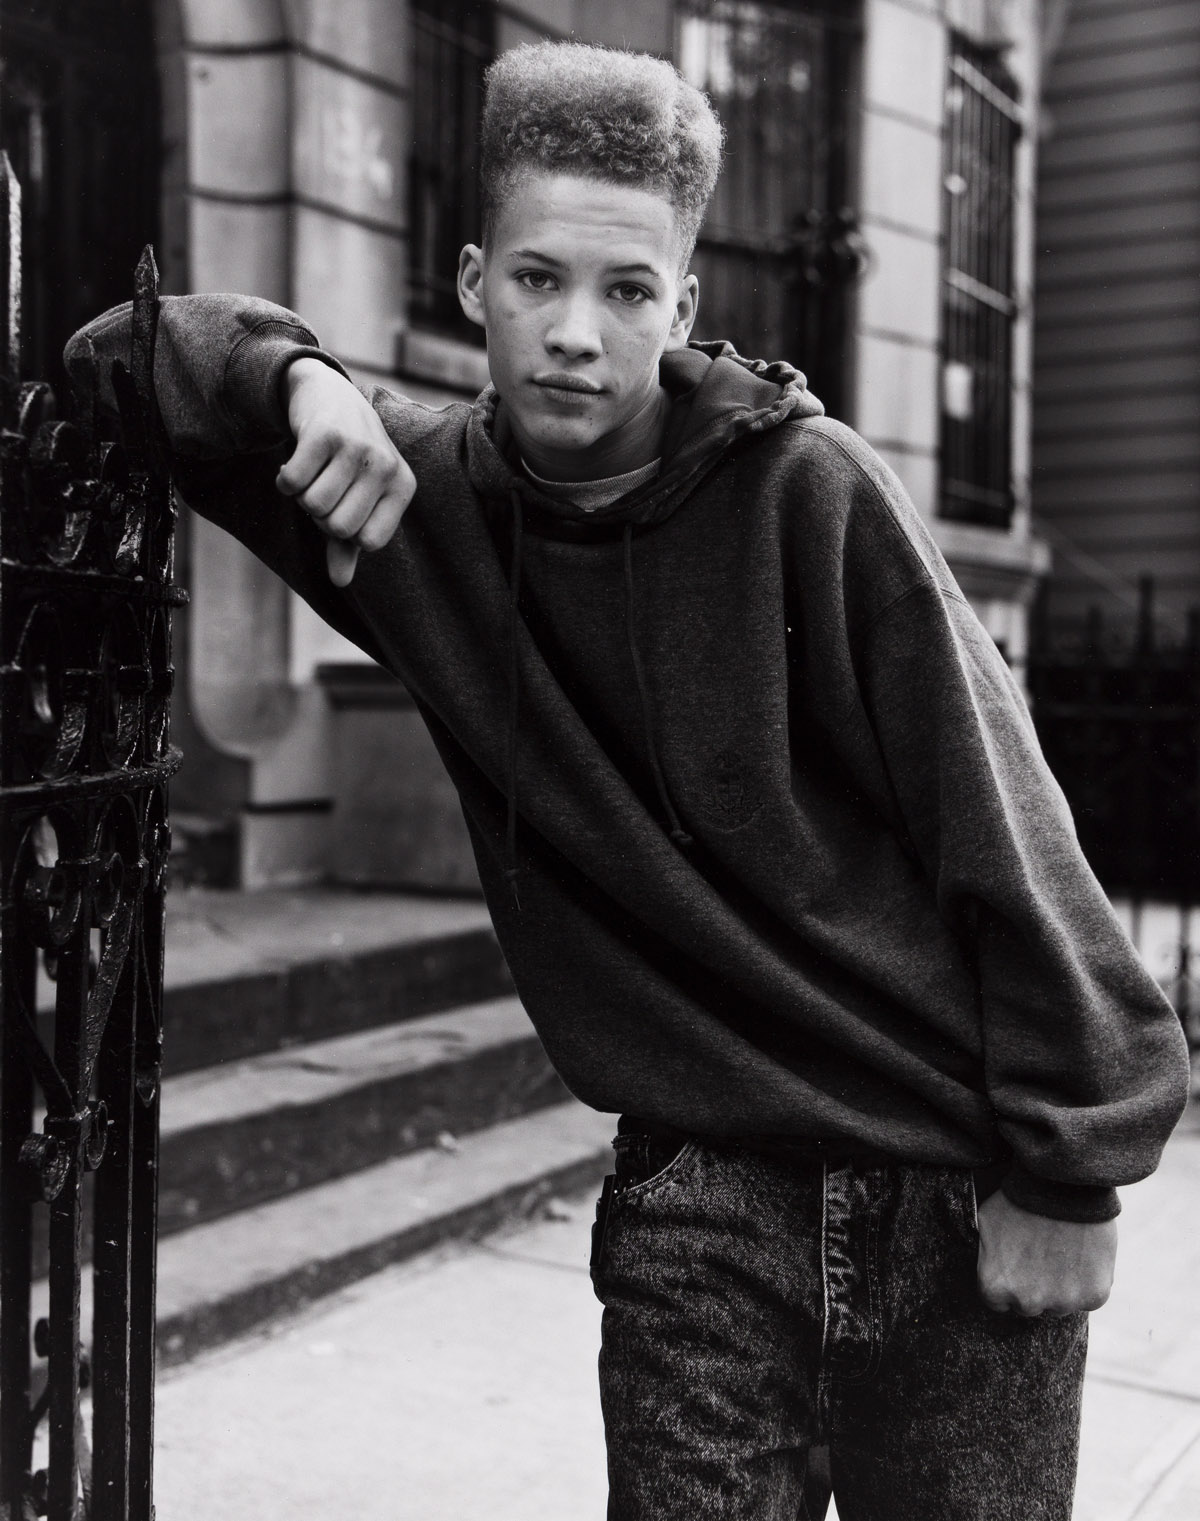 DAWOUD BEY (1968- ) Markie, Brooklyn, NY, from the series Street Portrait.